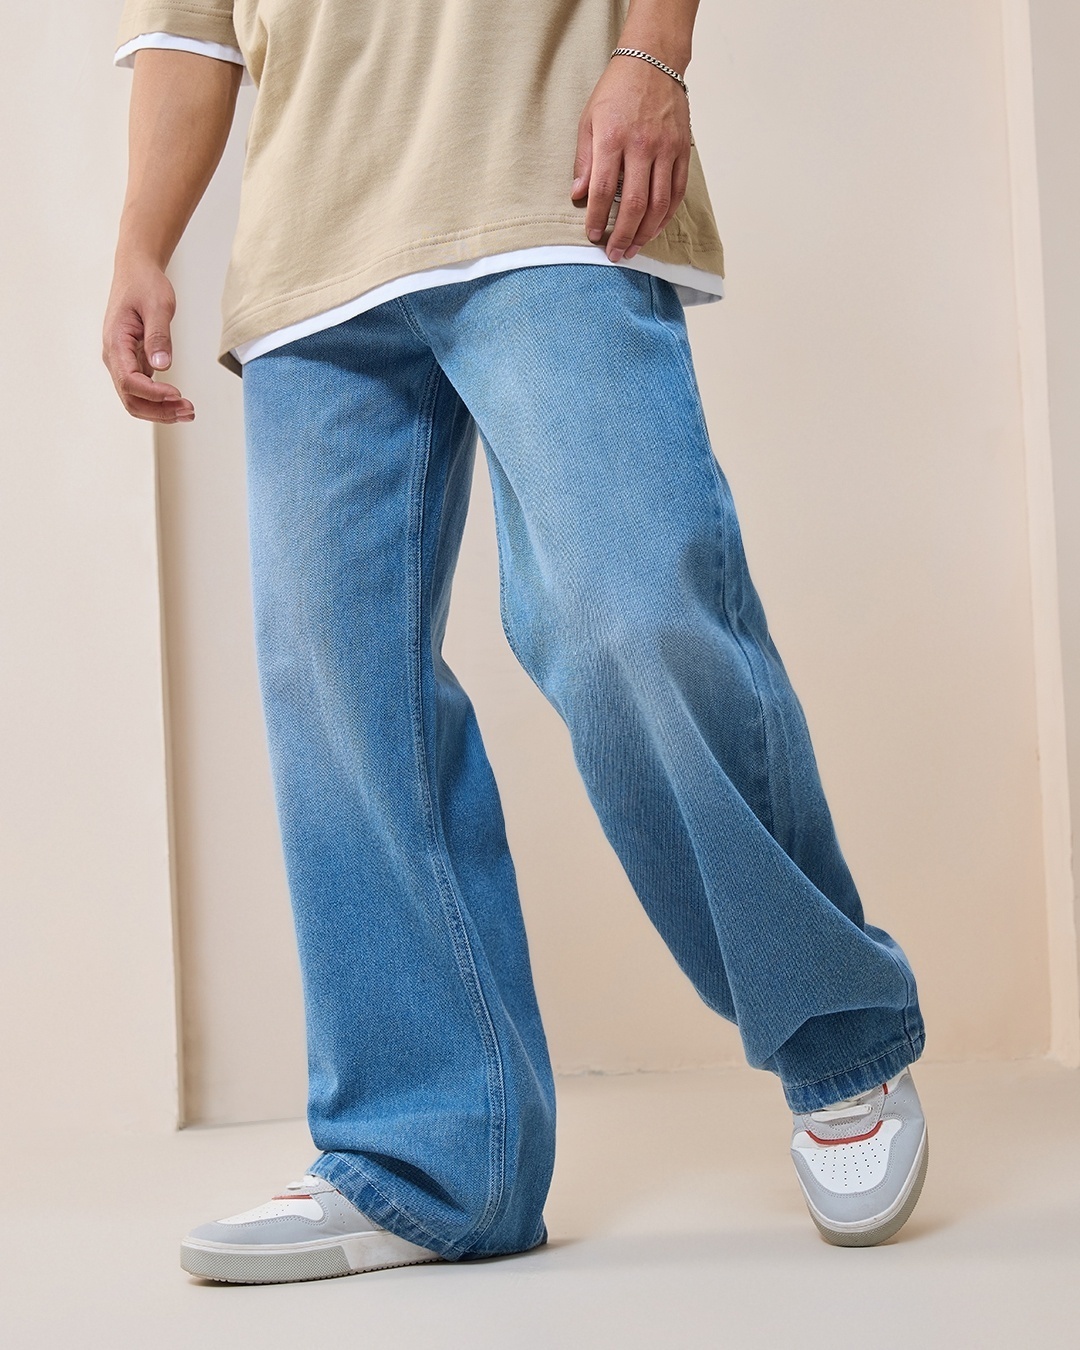 men wearing Skinny Baggy Jeans